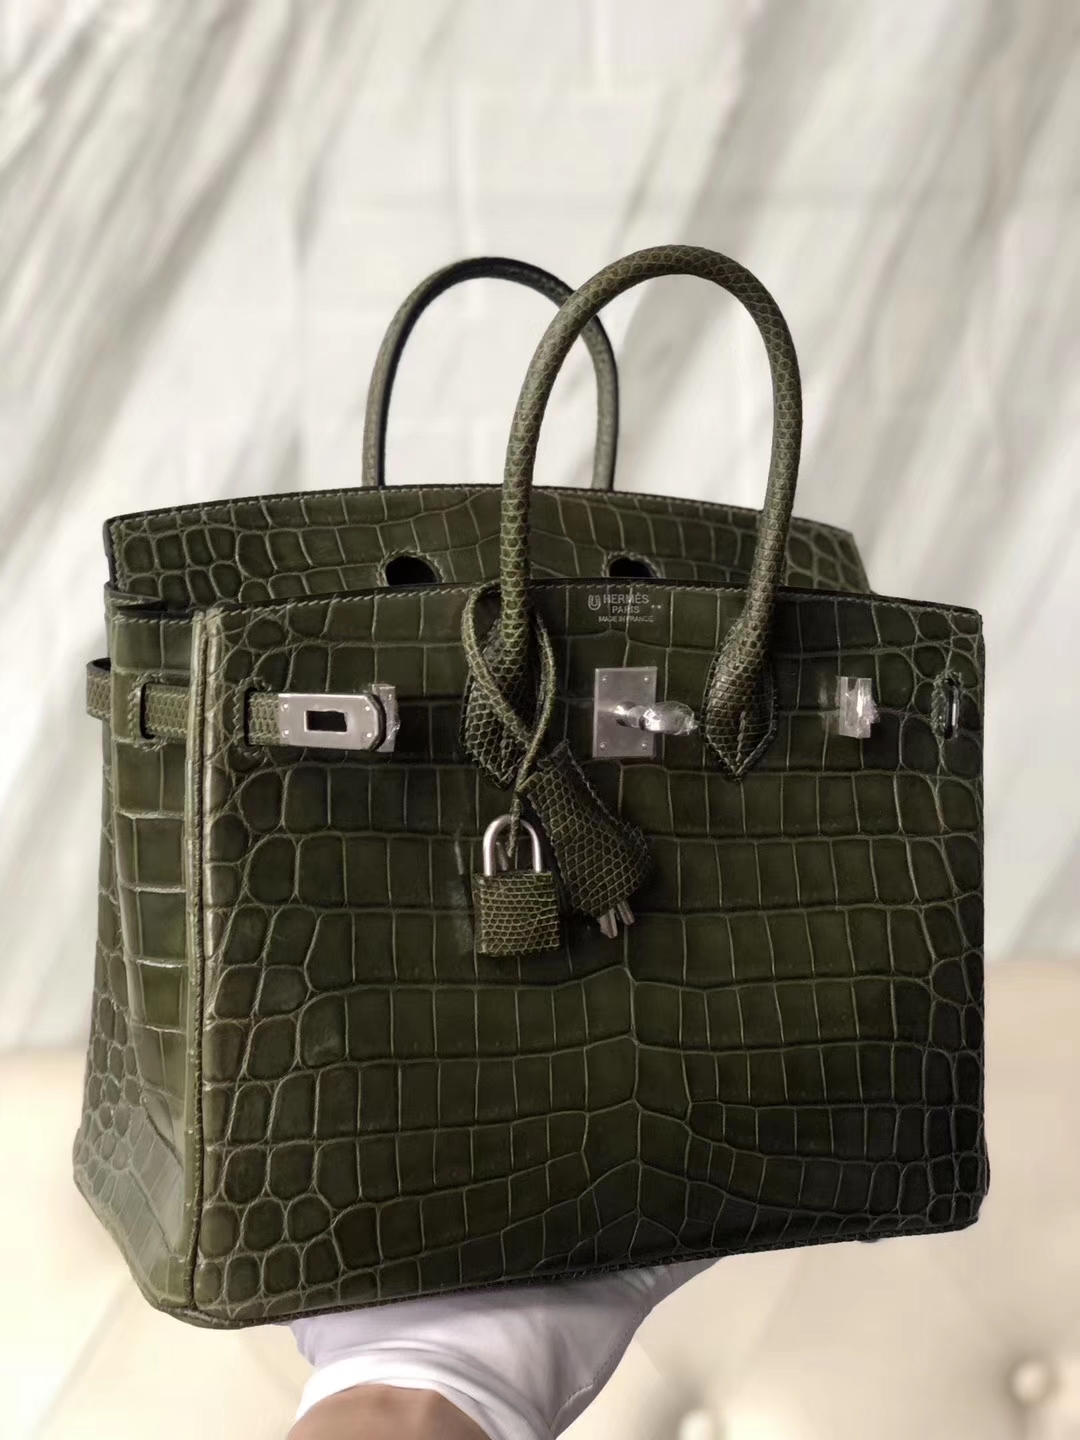 Luxury Hermes Shiny Crocodile/Lizard Leather Birkin Bag25cm in 6H Vert Olive